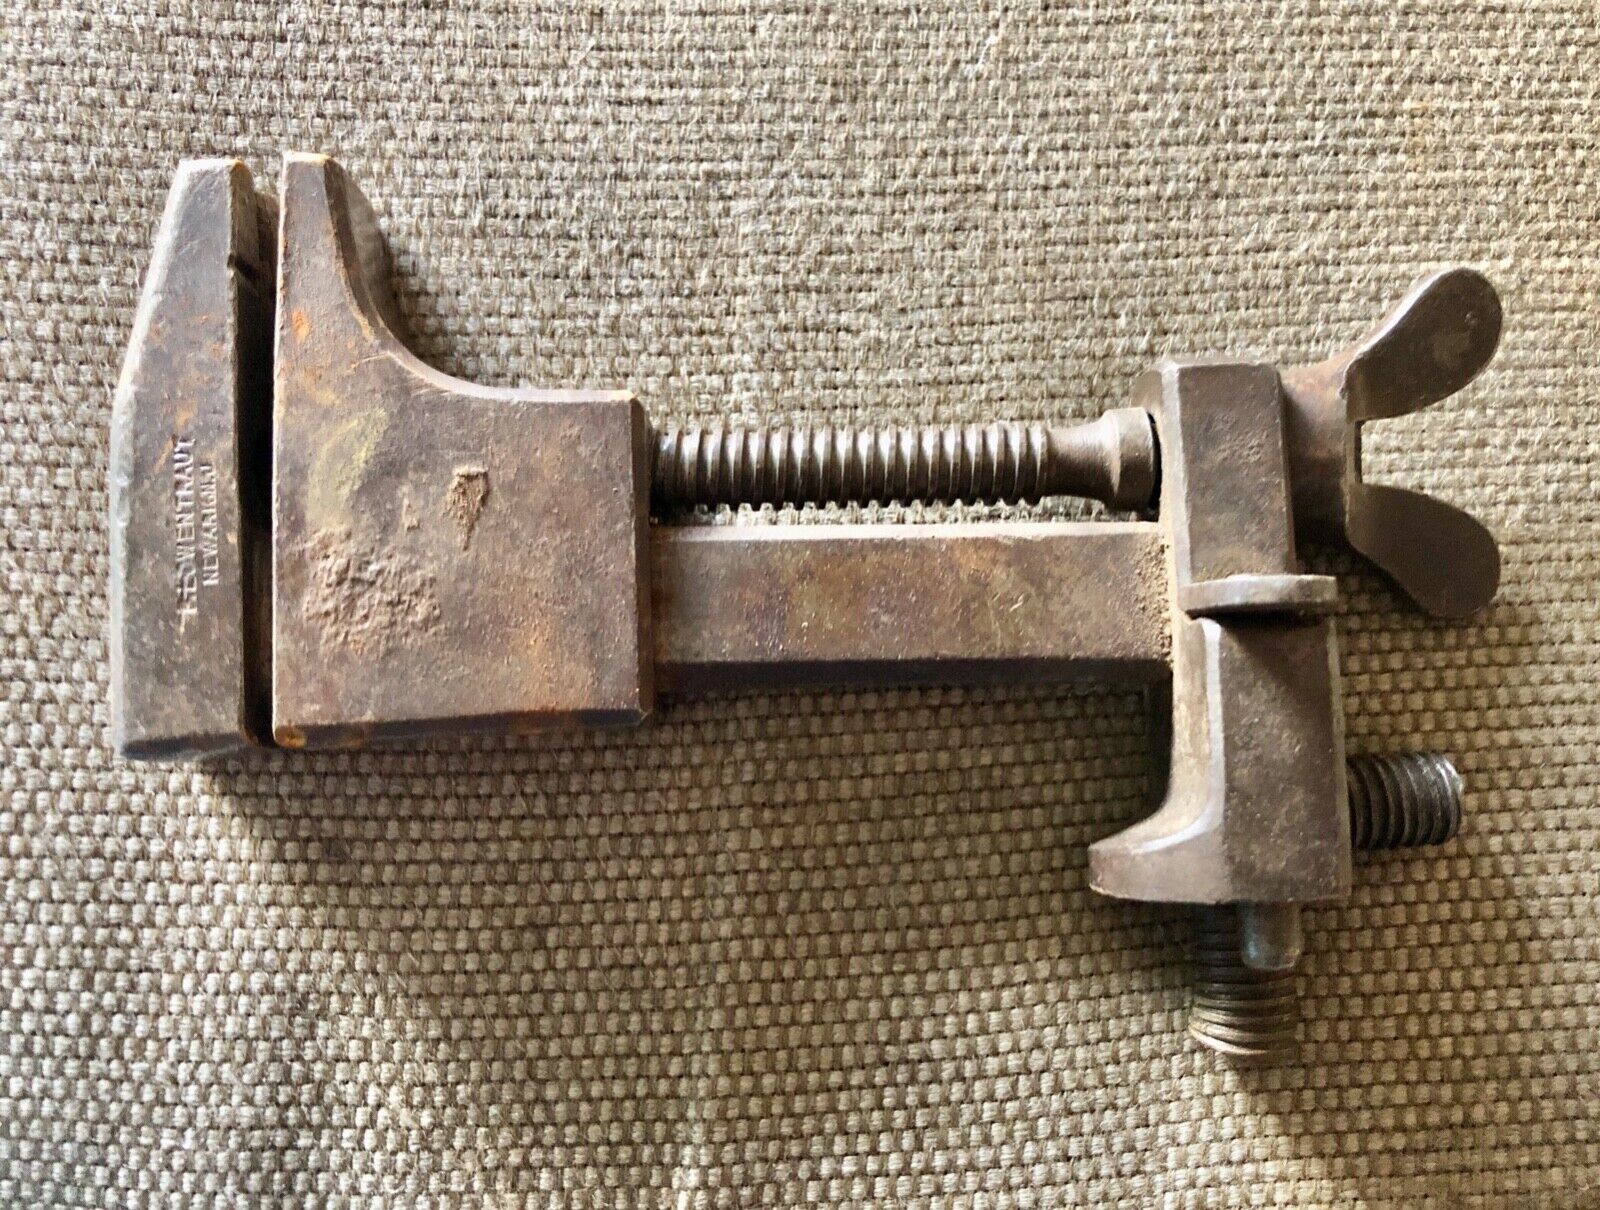 Lowentraut Antique Adjustable Brace Wrench